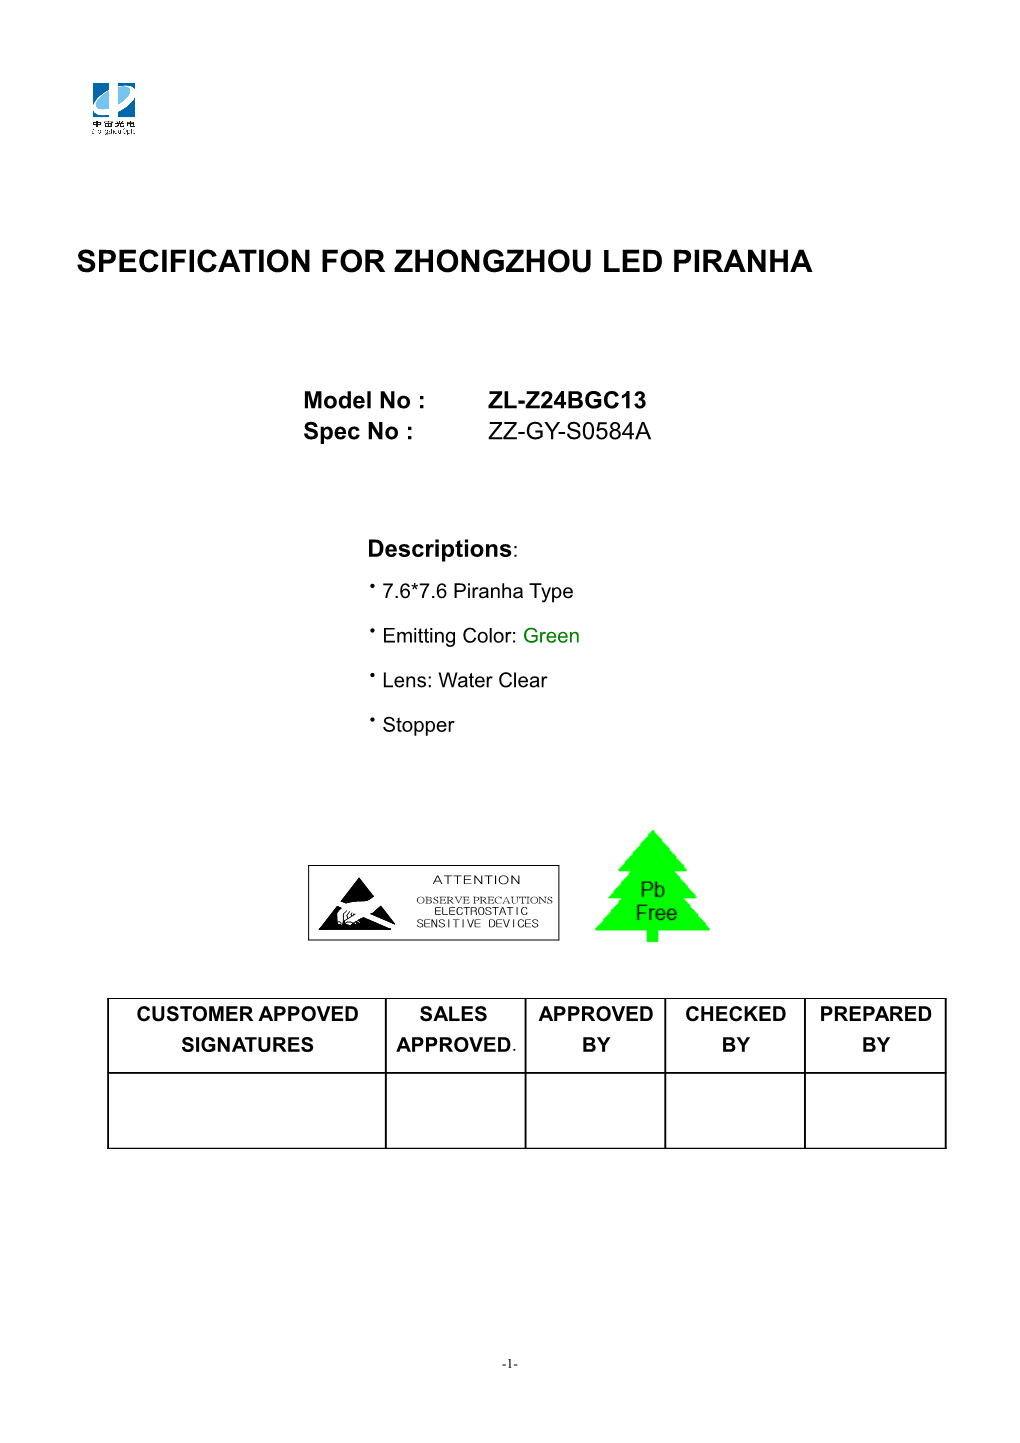 Specification for Zhongzhou Led Piranha